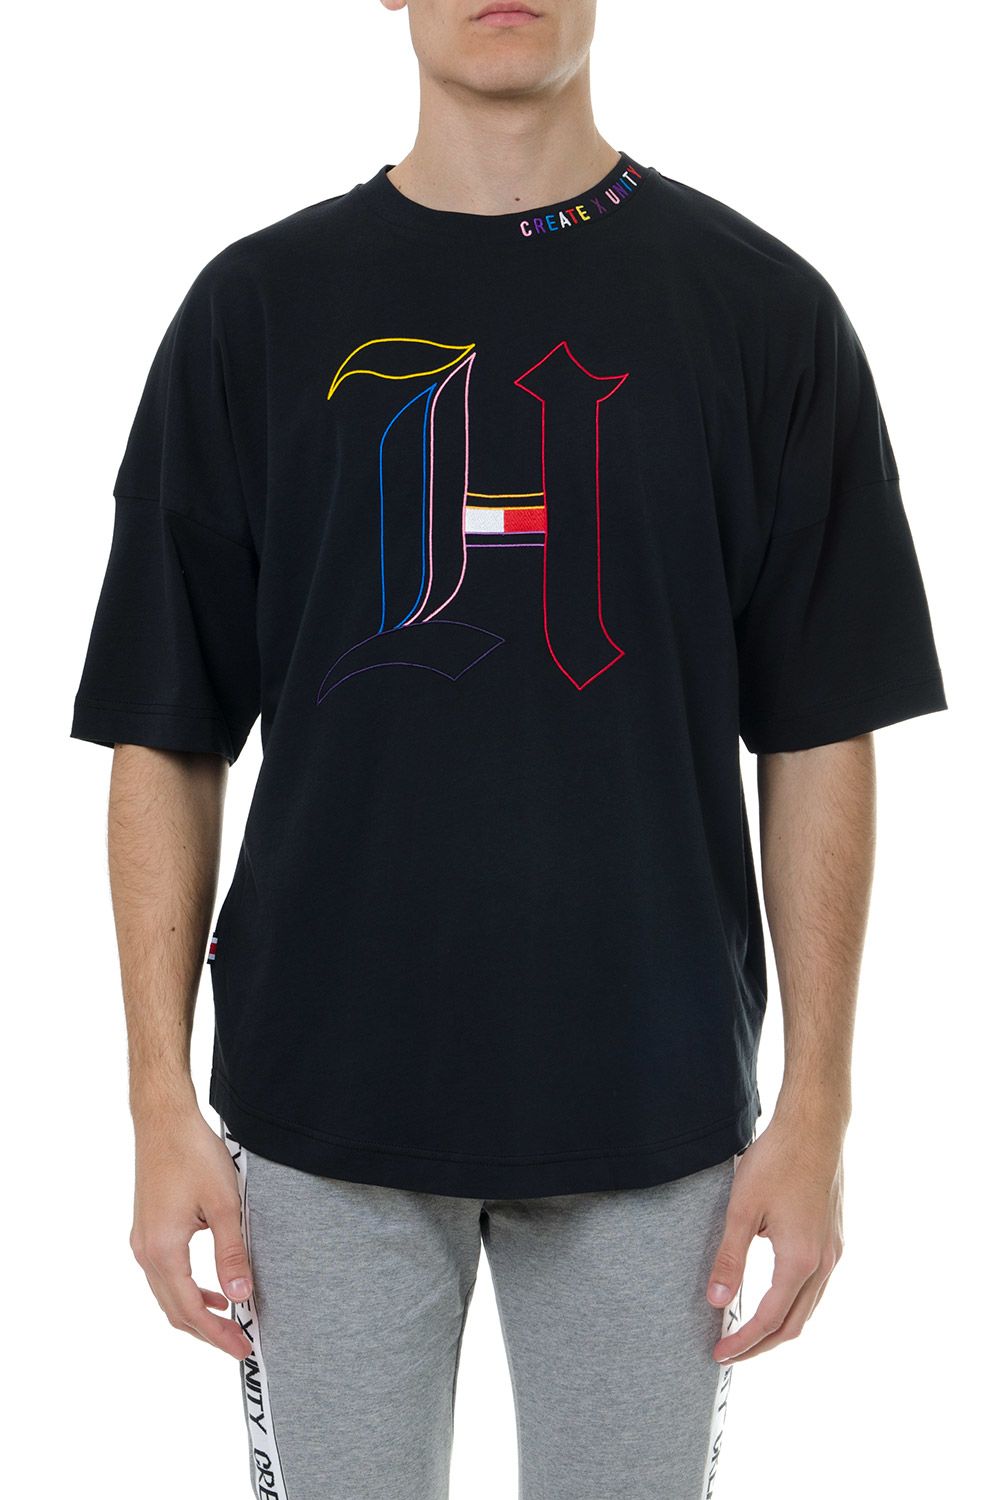 Hilfiger Black Lewis Hamilton Monogram T-shirt |